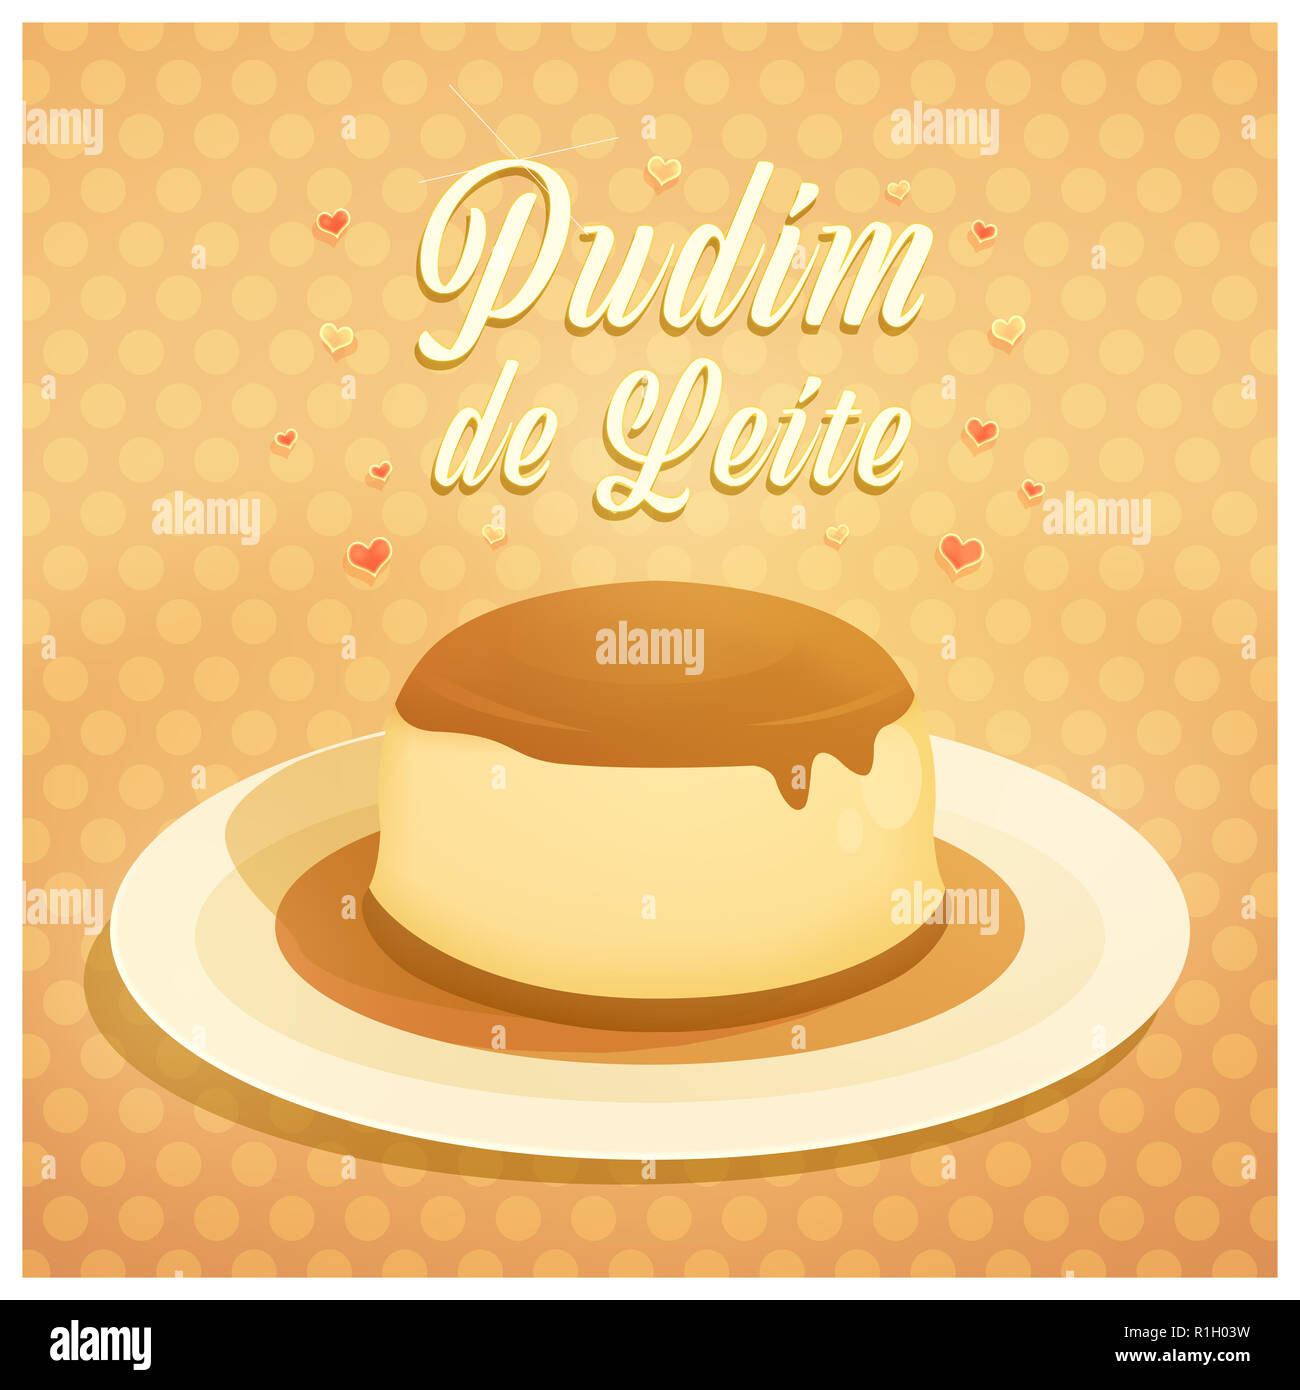 https://c8.alamy.com/comp/R1H03W/pudim-de-leite-milk-pudding-written-in-brazilian-portuguese-love-pudding-illustration-dessert-background-R1H03W.jpg